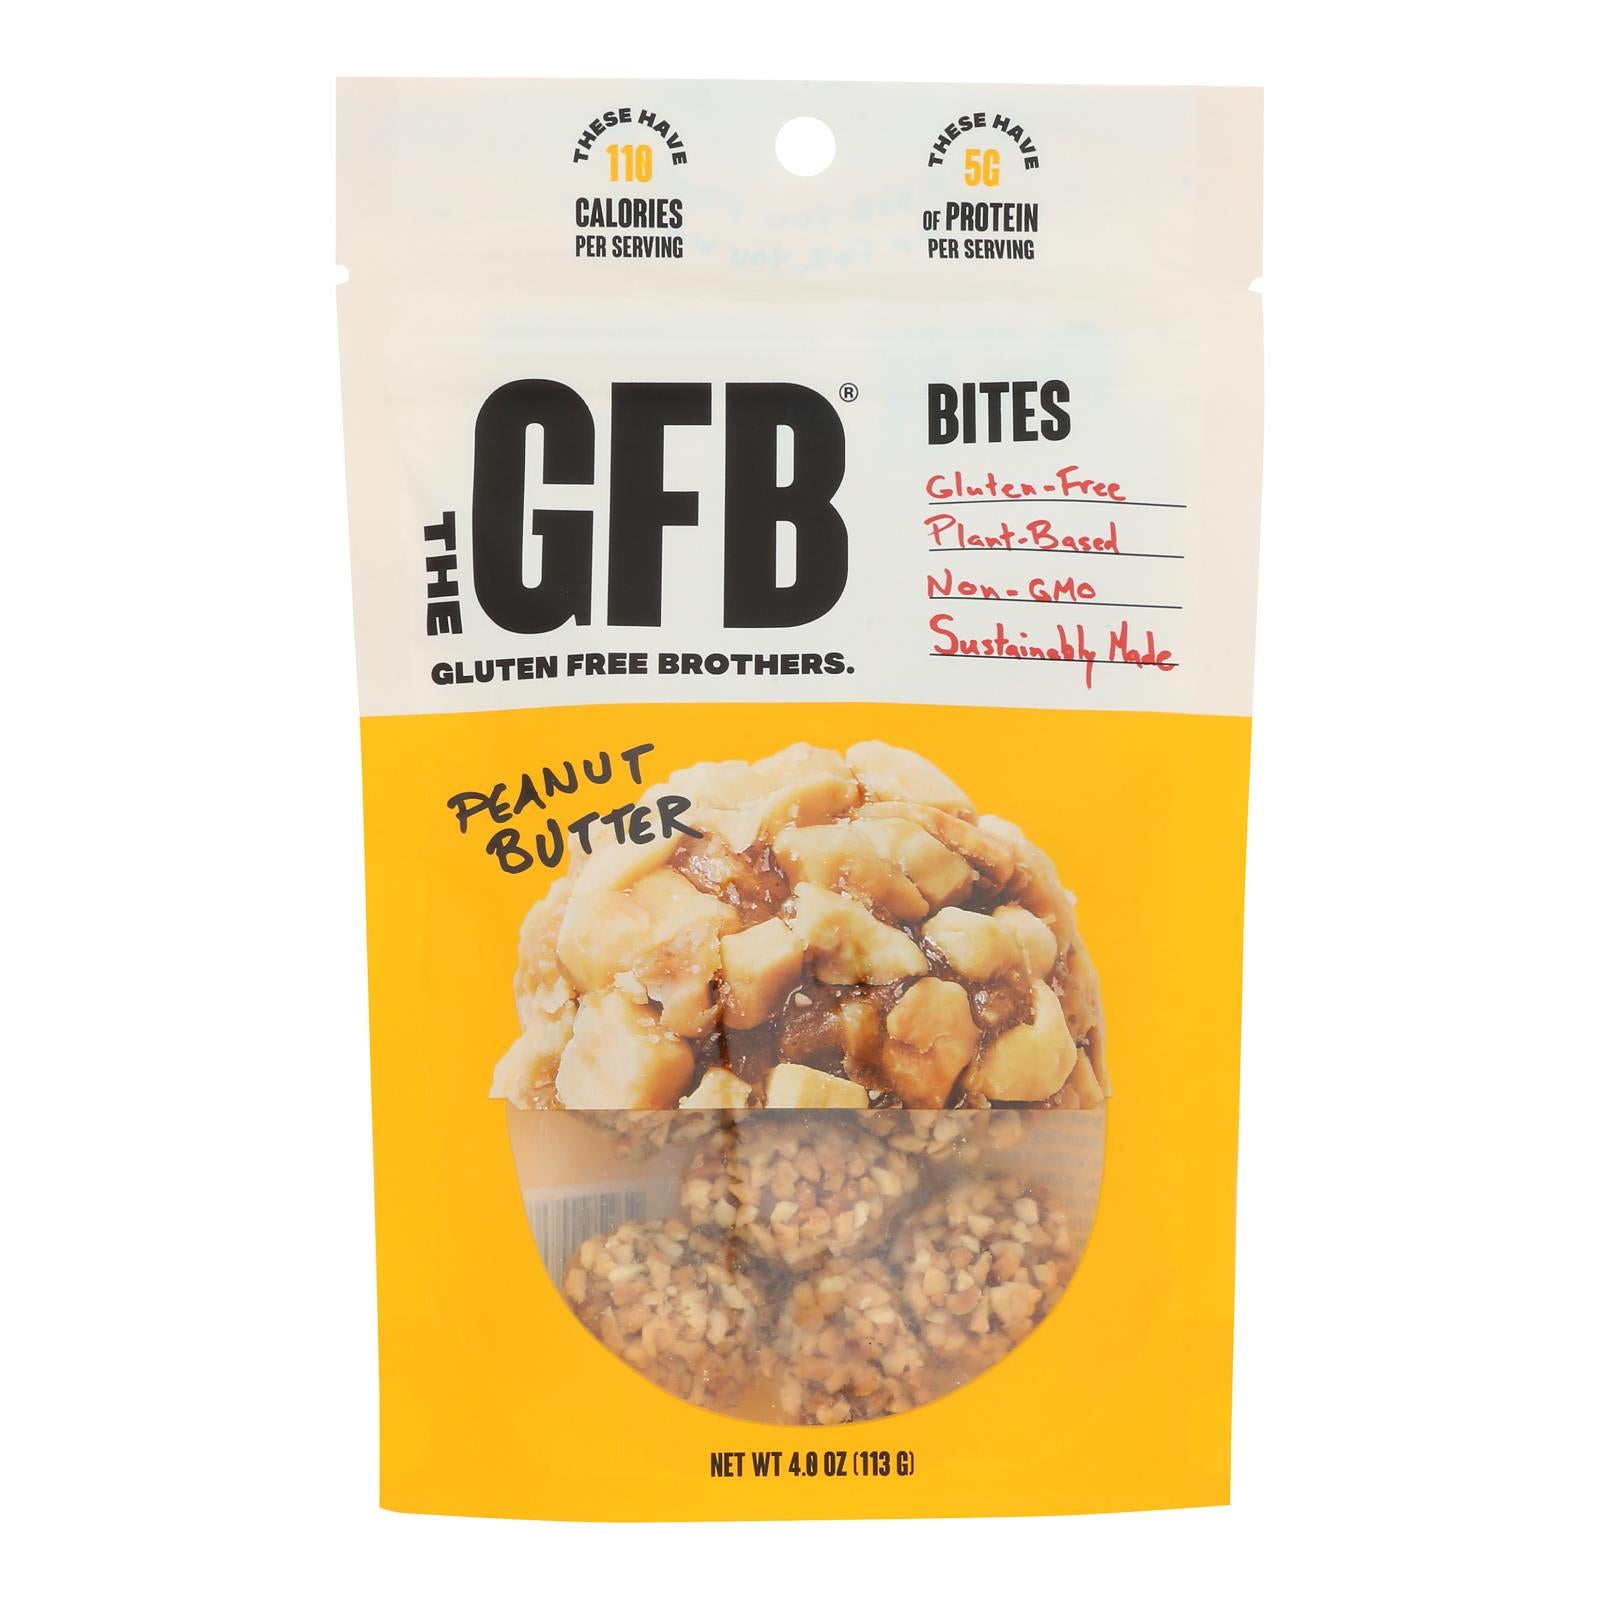 The Gfb - Bites Peanut Butter Gluten Free - Case of 6 - 4 OZ